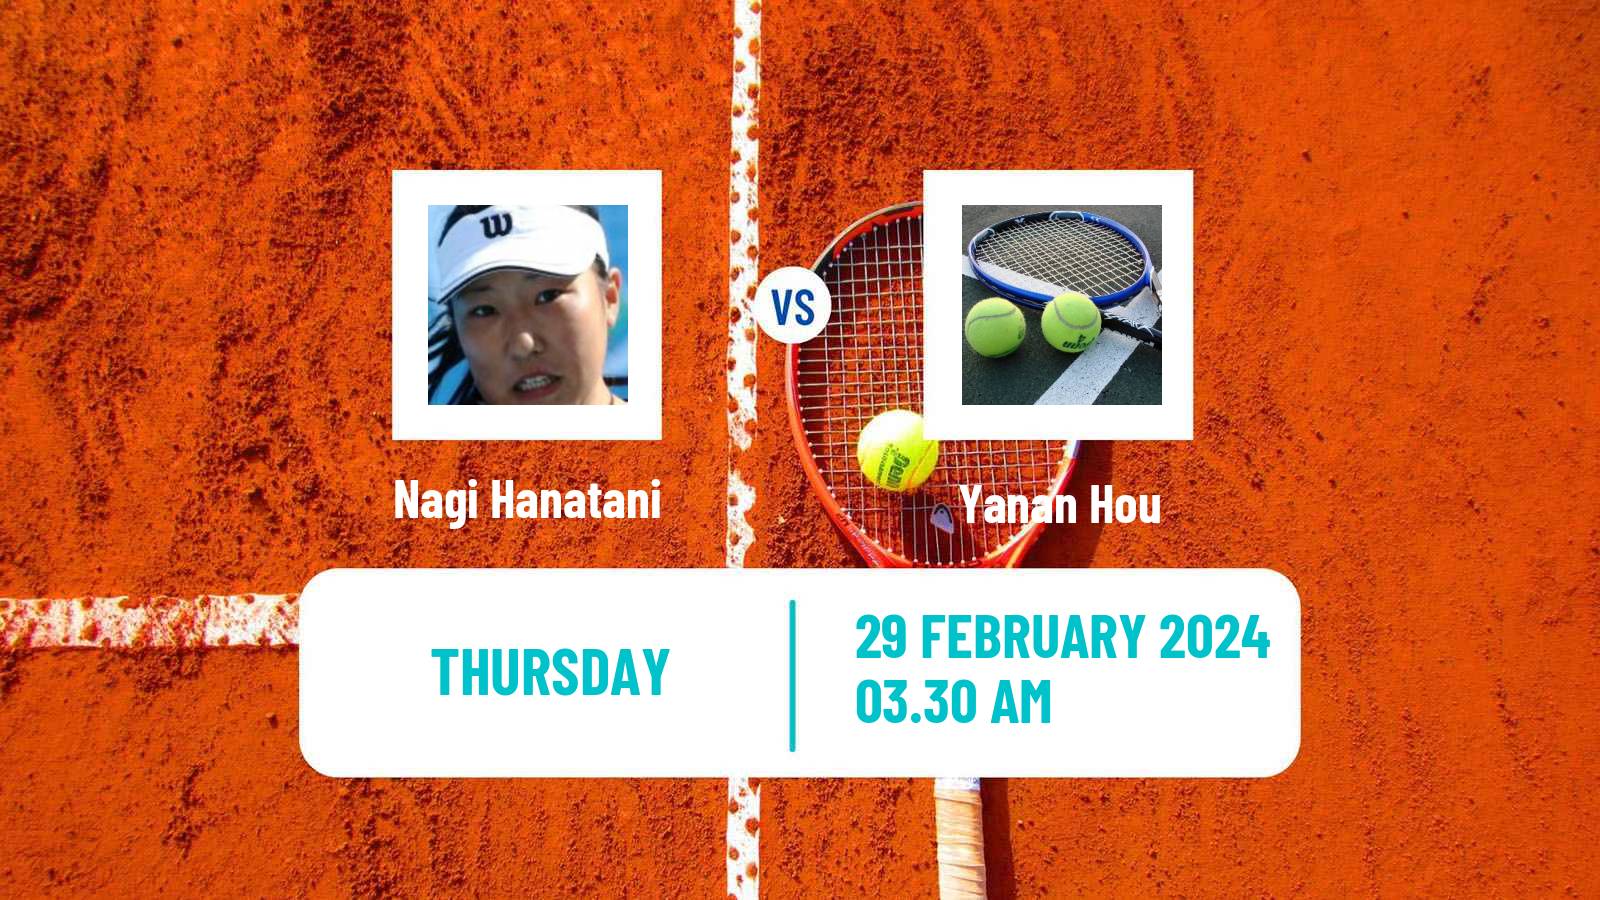 Tennis ITF W15 Nakhon Si Thammarat 2 Women Nagi Hanatani - Yanan Hou